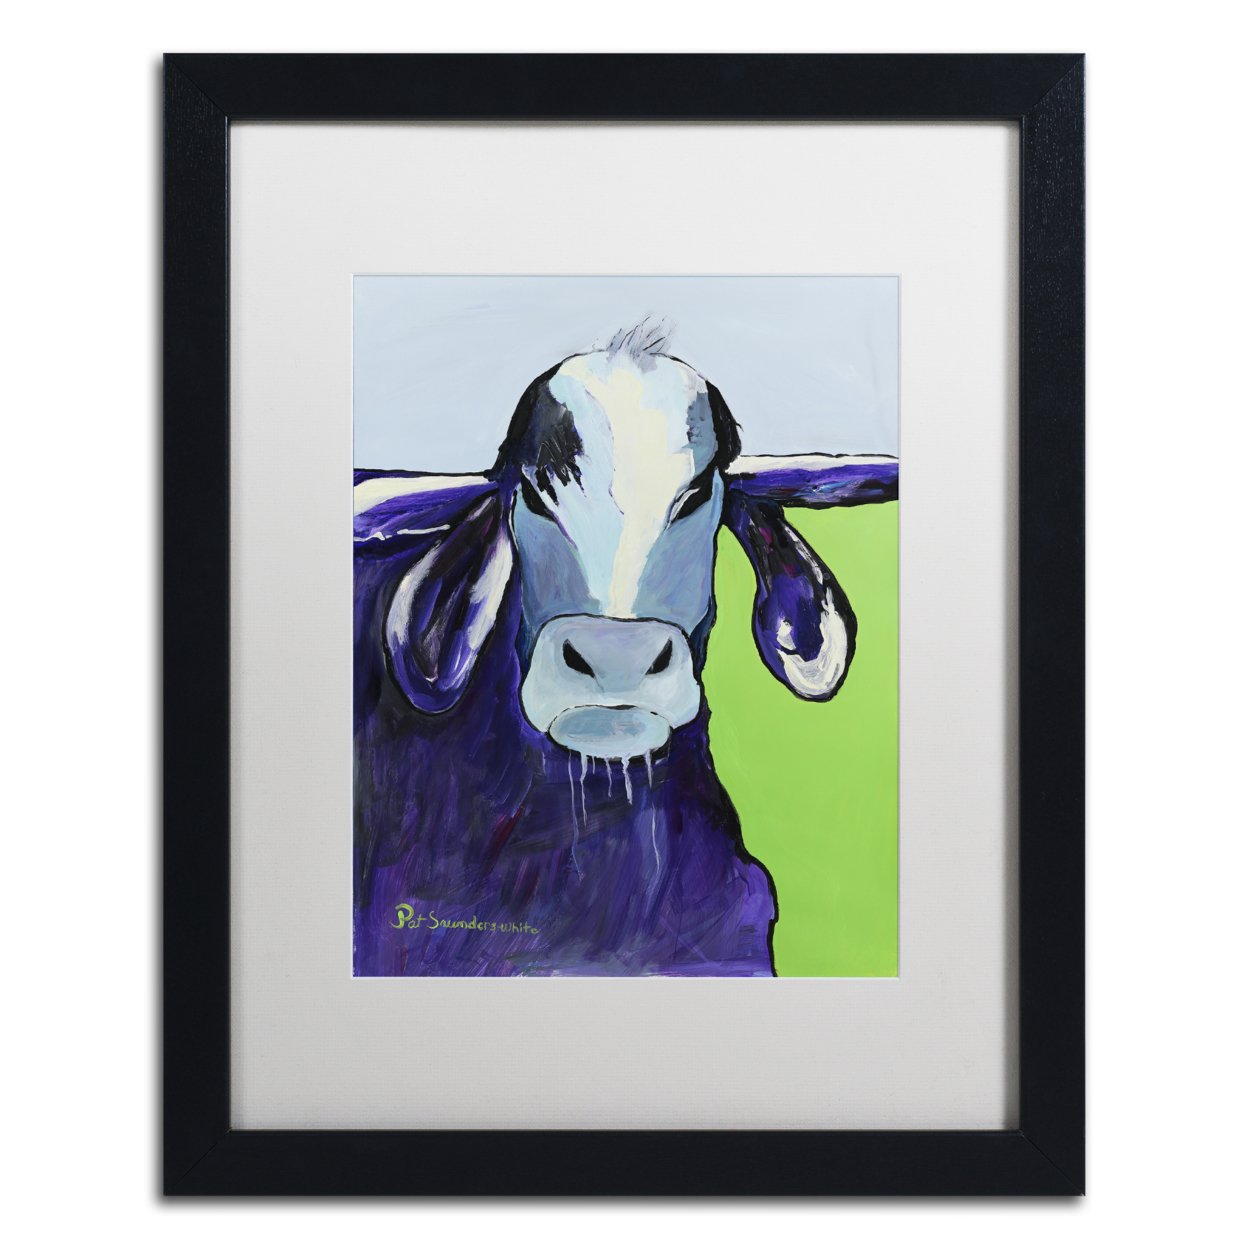 Pat Saunders-White 'Bull Drool II' Black Wooden Framed Art 18 X 22 Inches